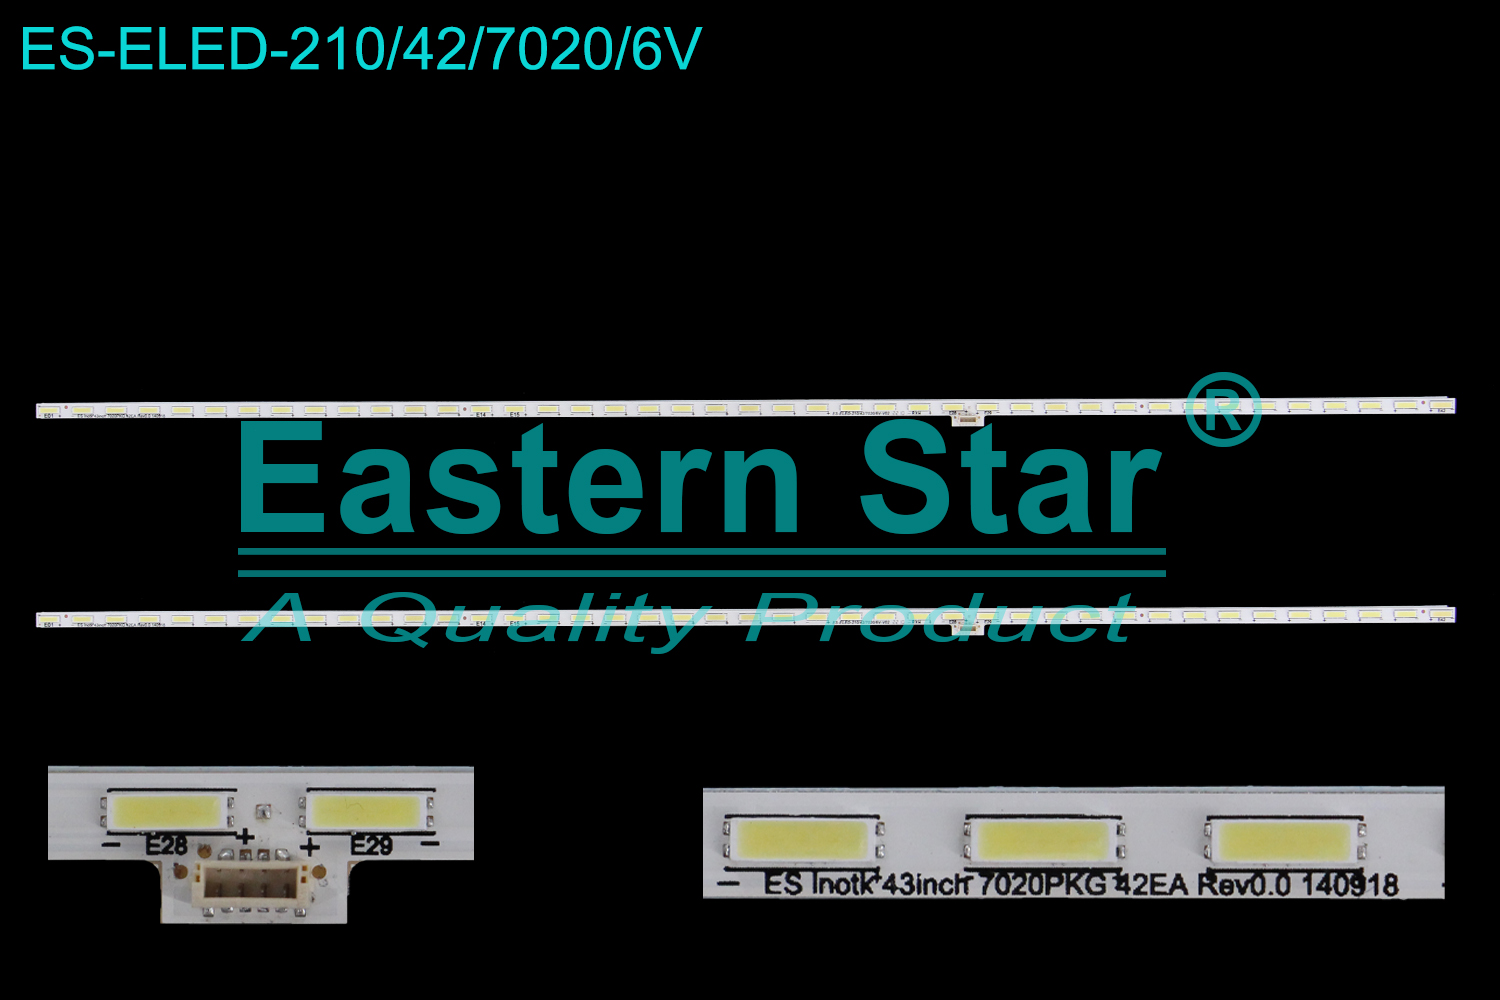 ES-ELED-210 ELED/EDGE TV backlight use for Sony 43'' 42LEDs Lg Innotek 43inch 7020PKG 42EA Rev0.0 140918 LED STRIPS(2)